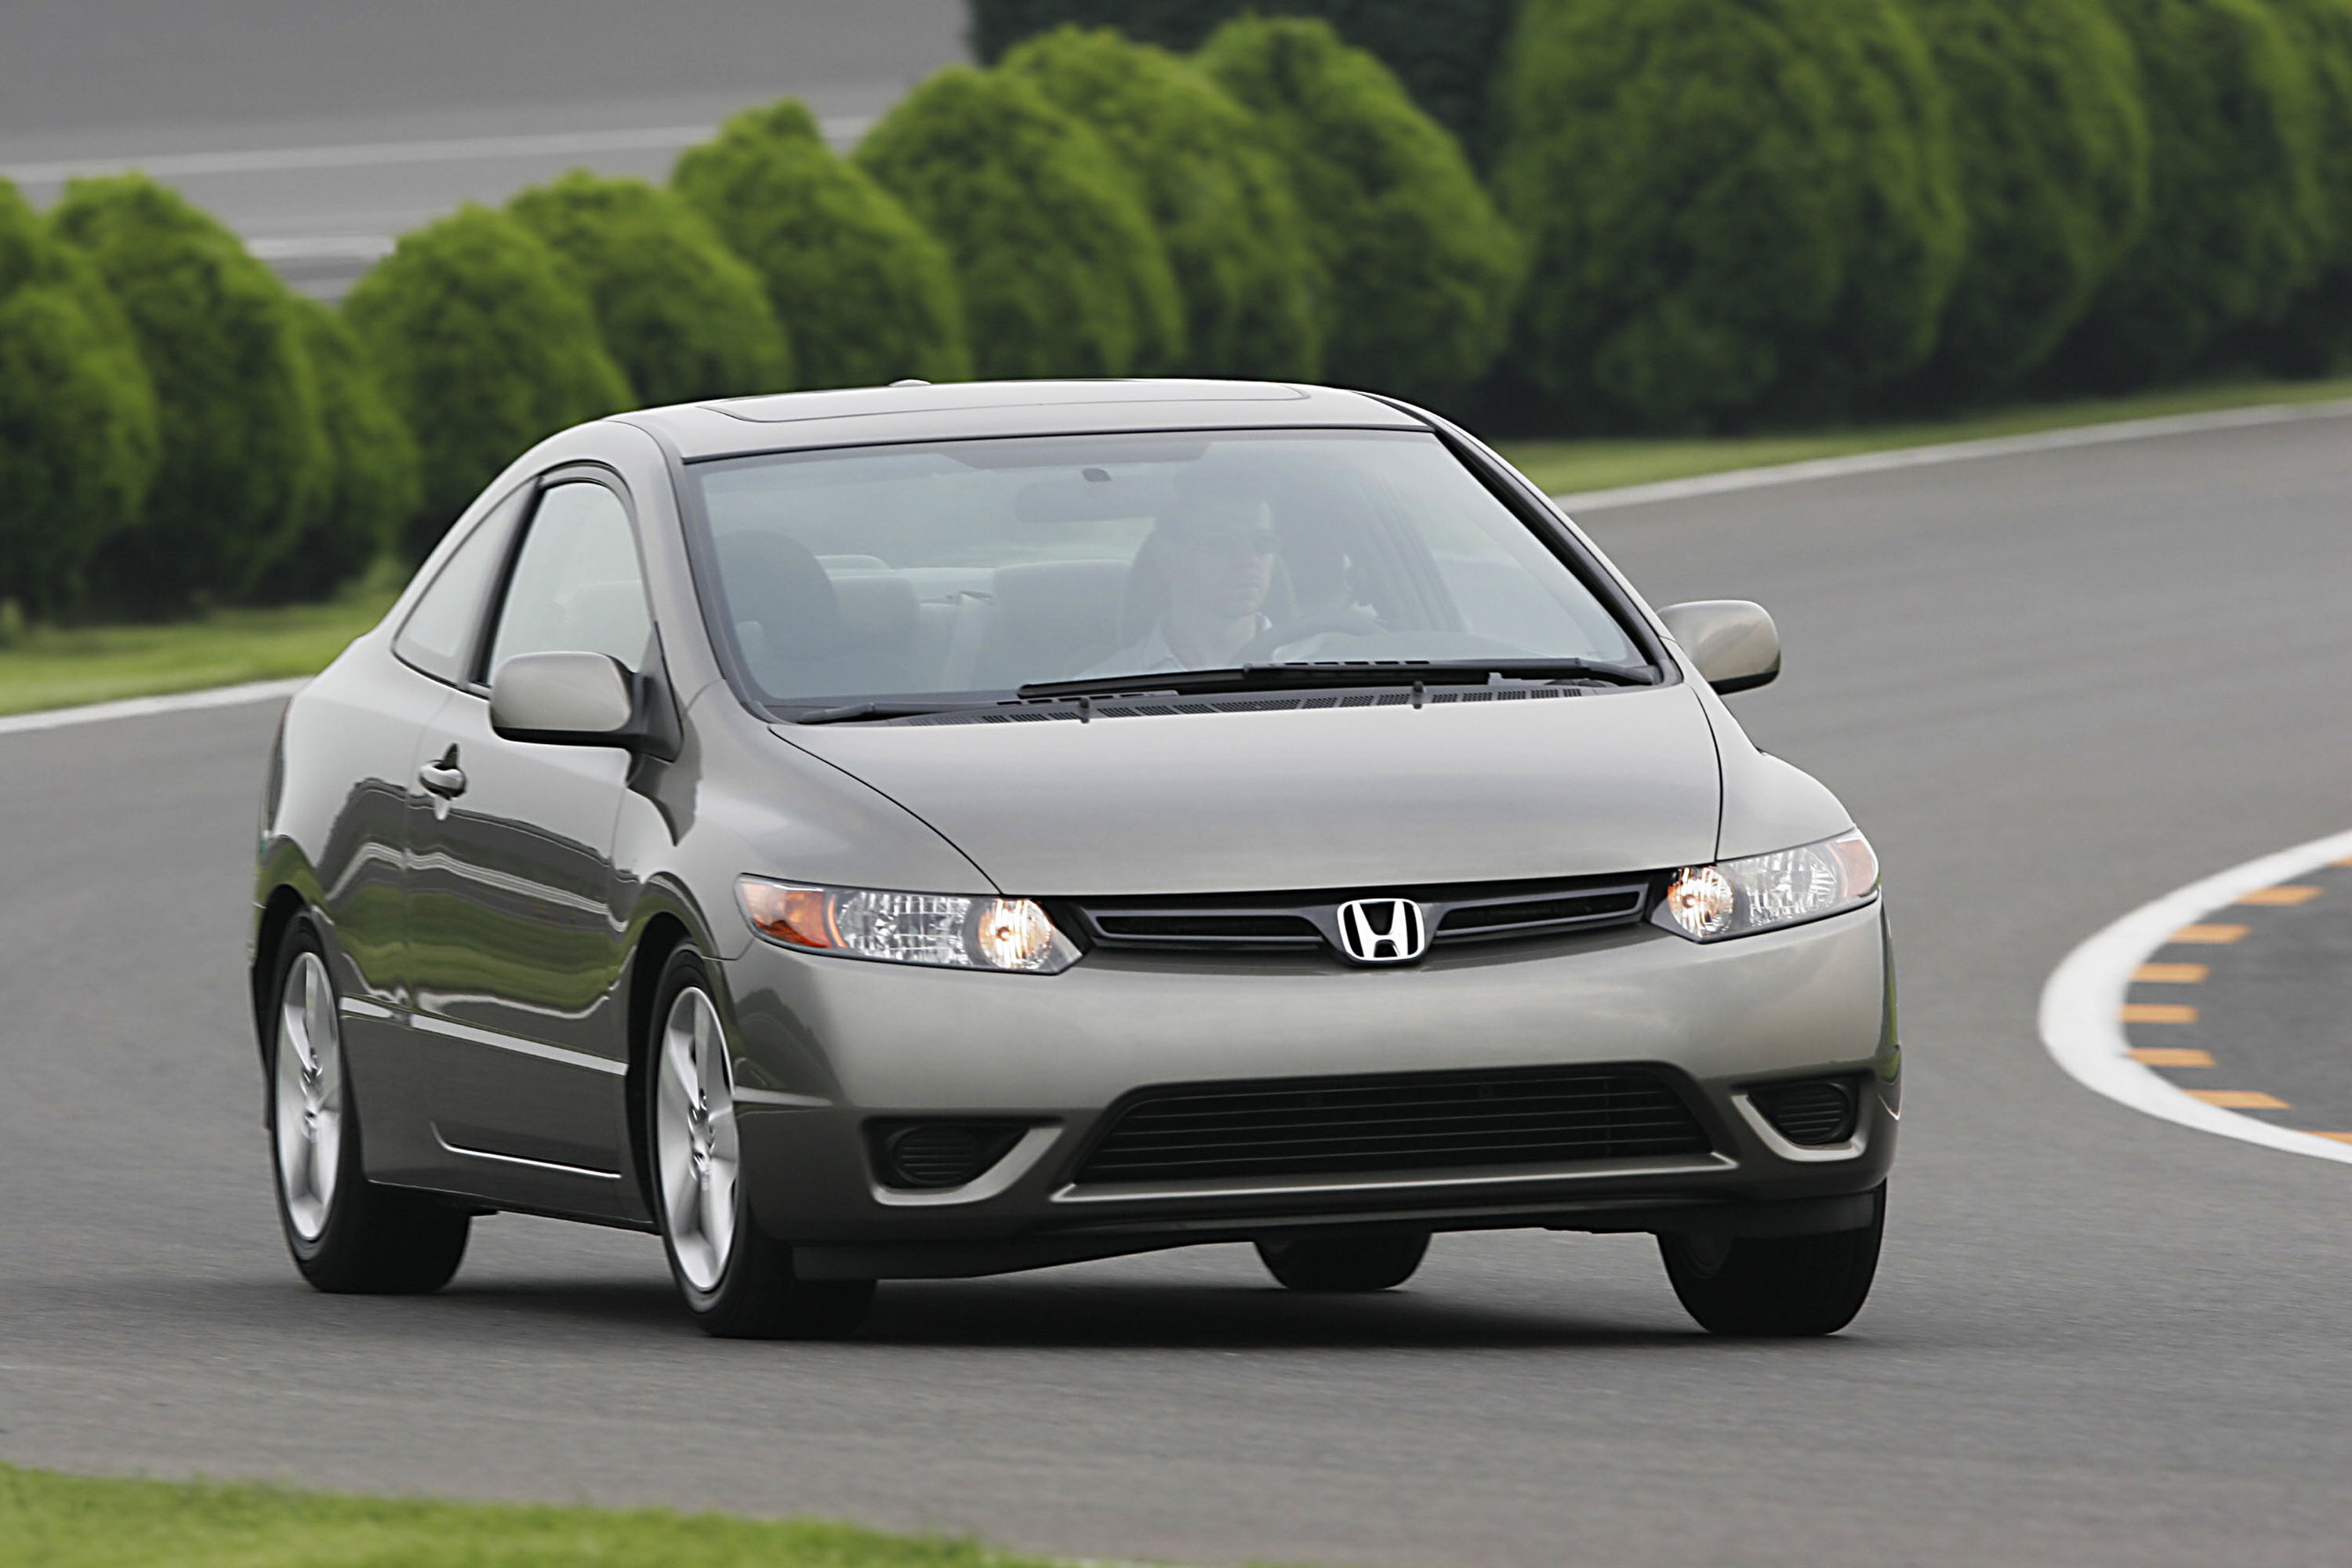 Honda civic фото. Honda Civic Coupe 2007. Хонда Цивик 8. Honda Civic 2006. Honda Civic 2006 2008.